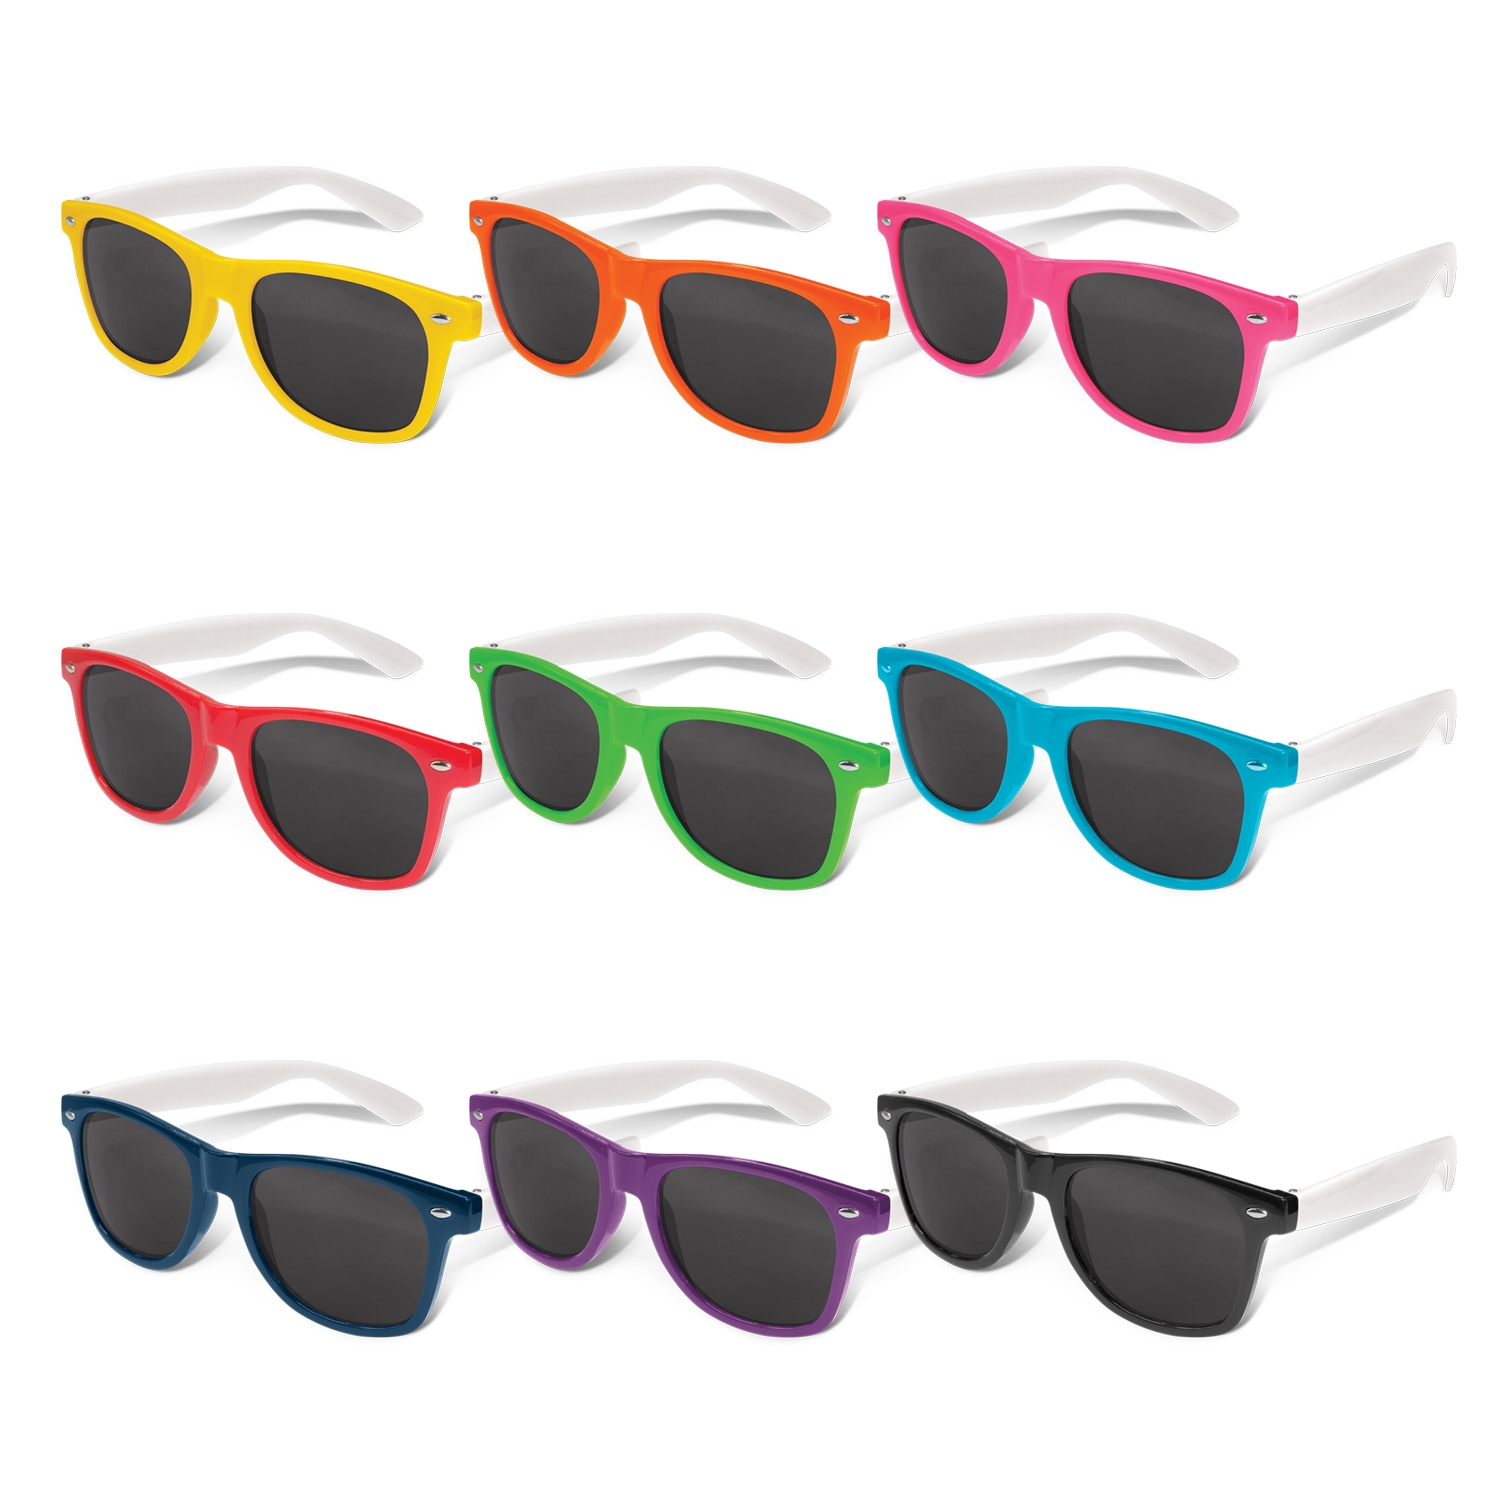 Malibu Premium Sunglasses – White Arms